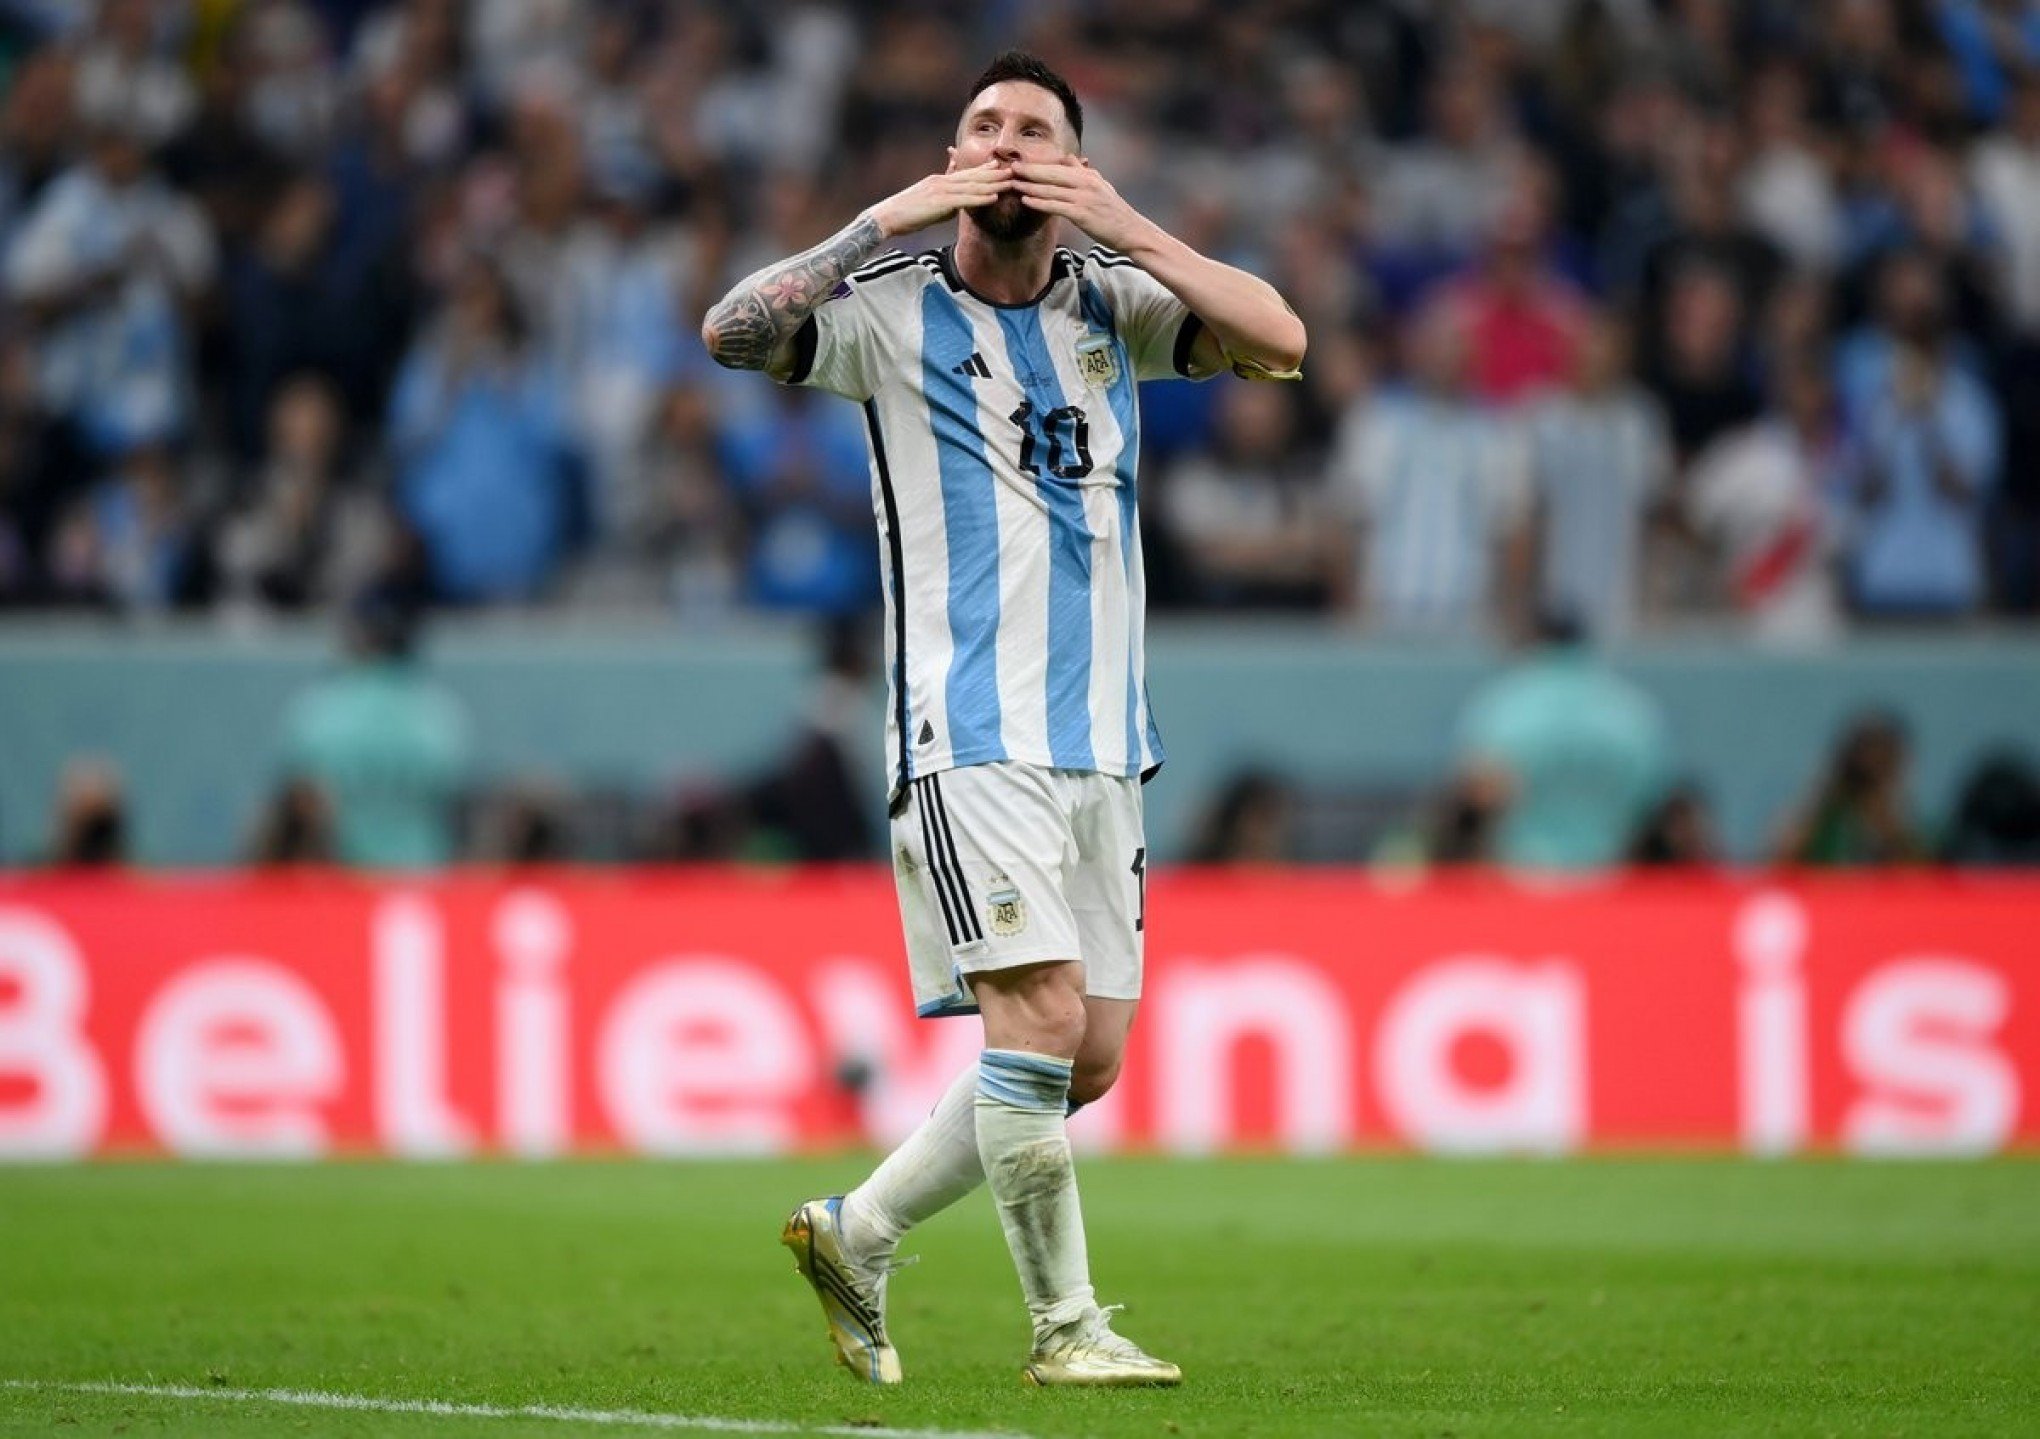 Messi abre portas para jogar Copa de 2026, porém considera